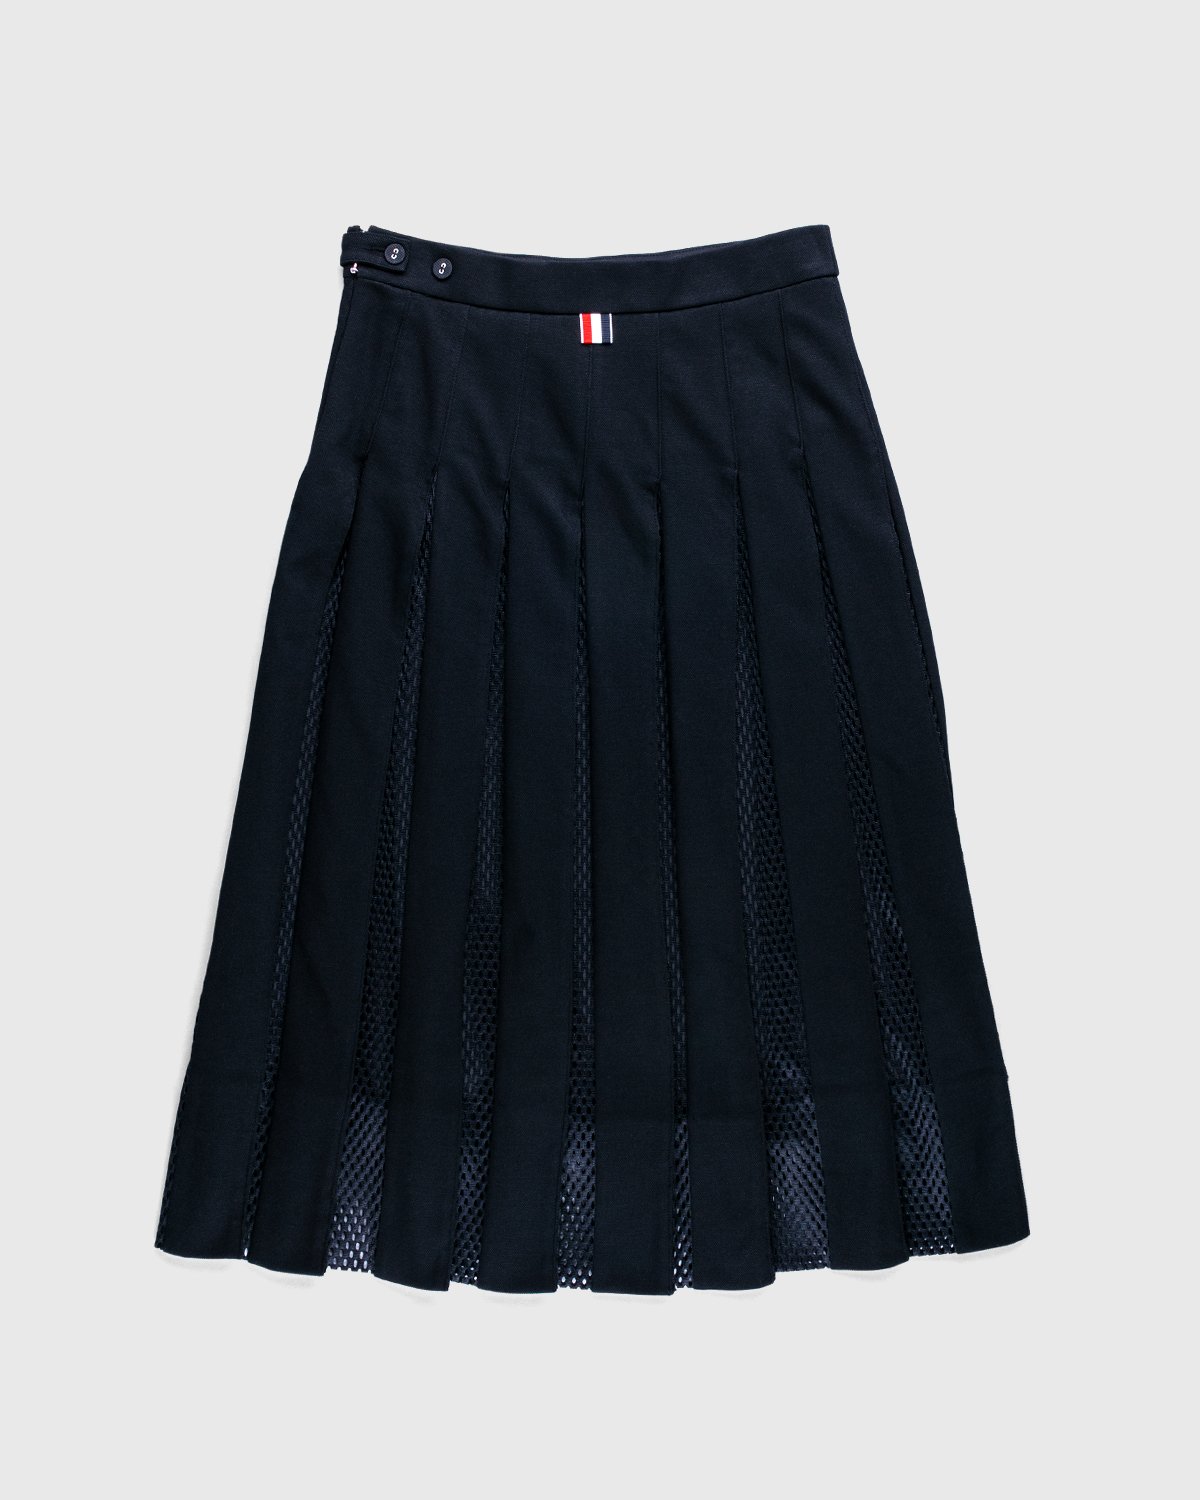 Thom Browne x Highsnobiety - Men's Pleated Mesh Skirt Black - Clothing - Black - Image 2